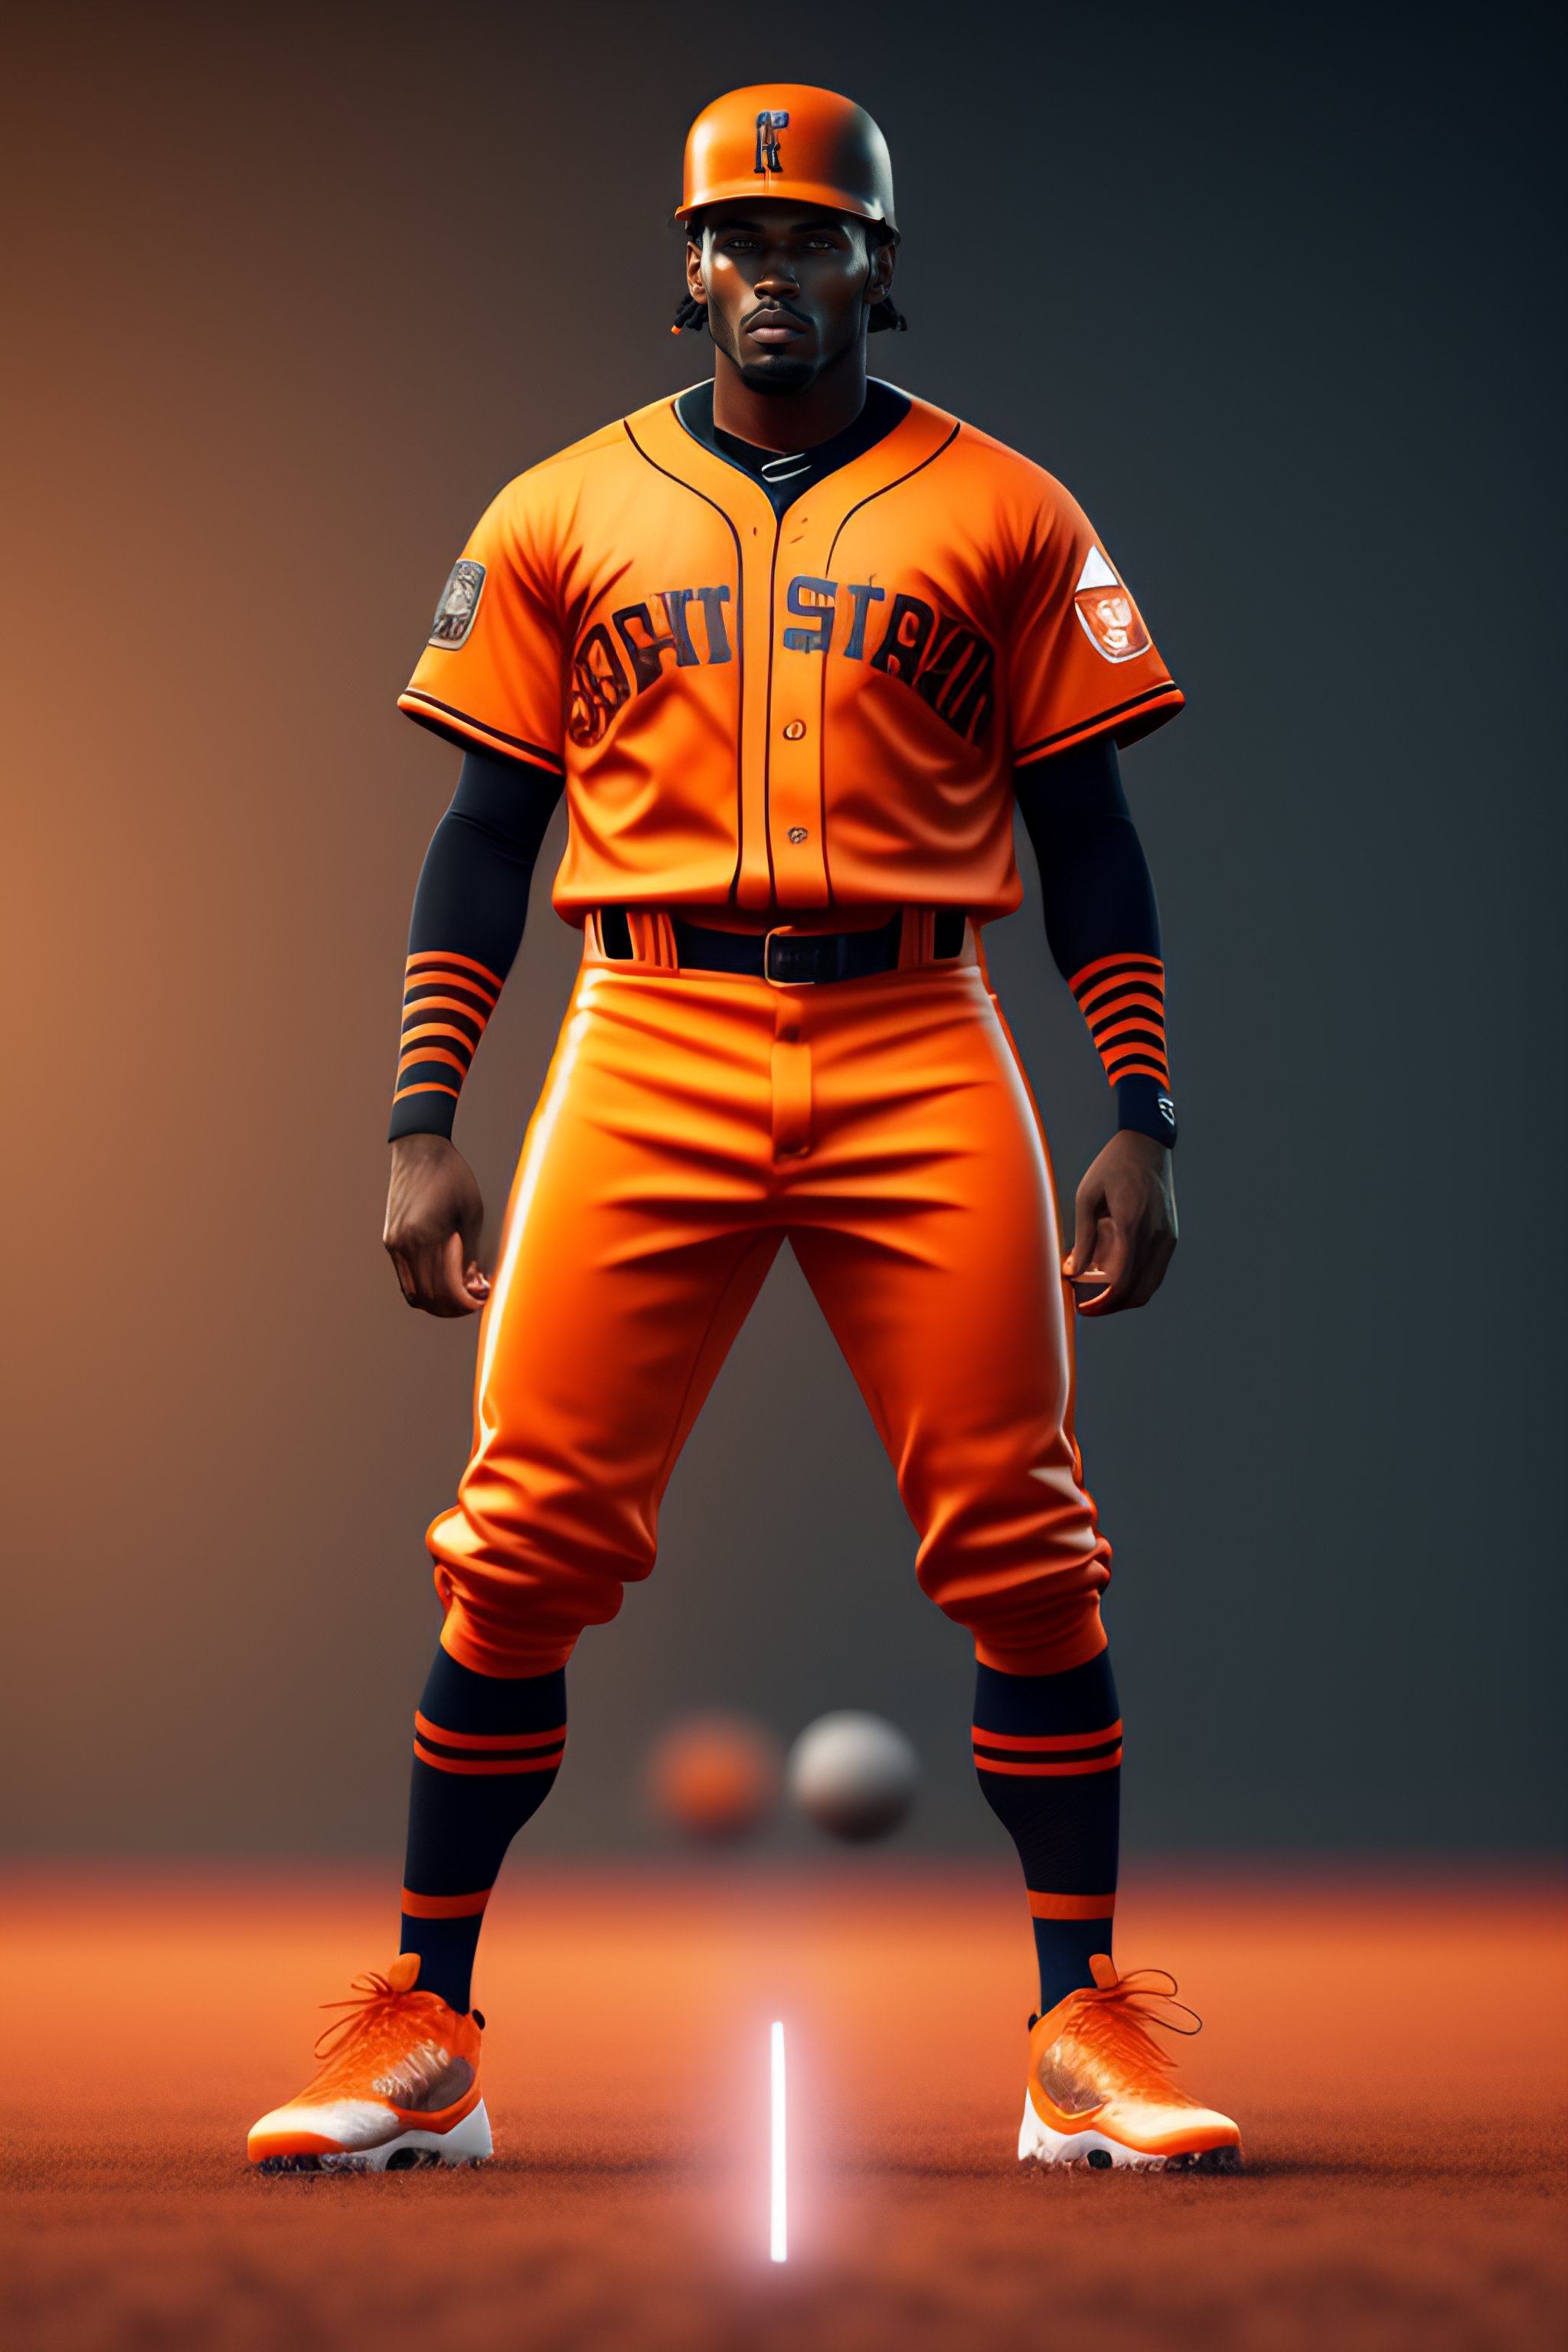 Lexica - Disruptive baseball uniform orange and black, unreal